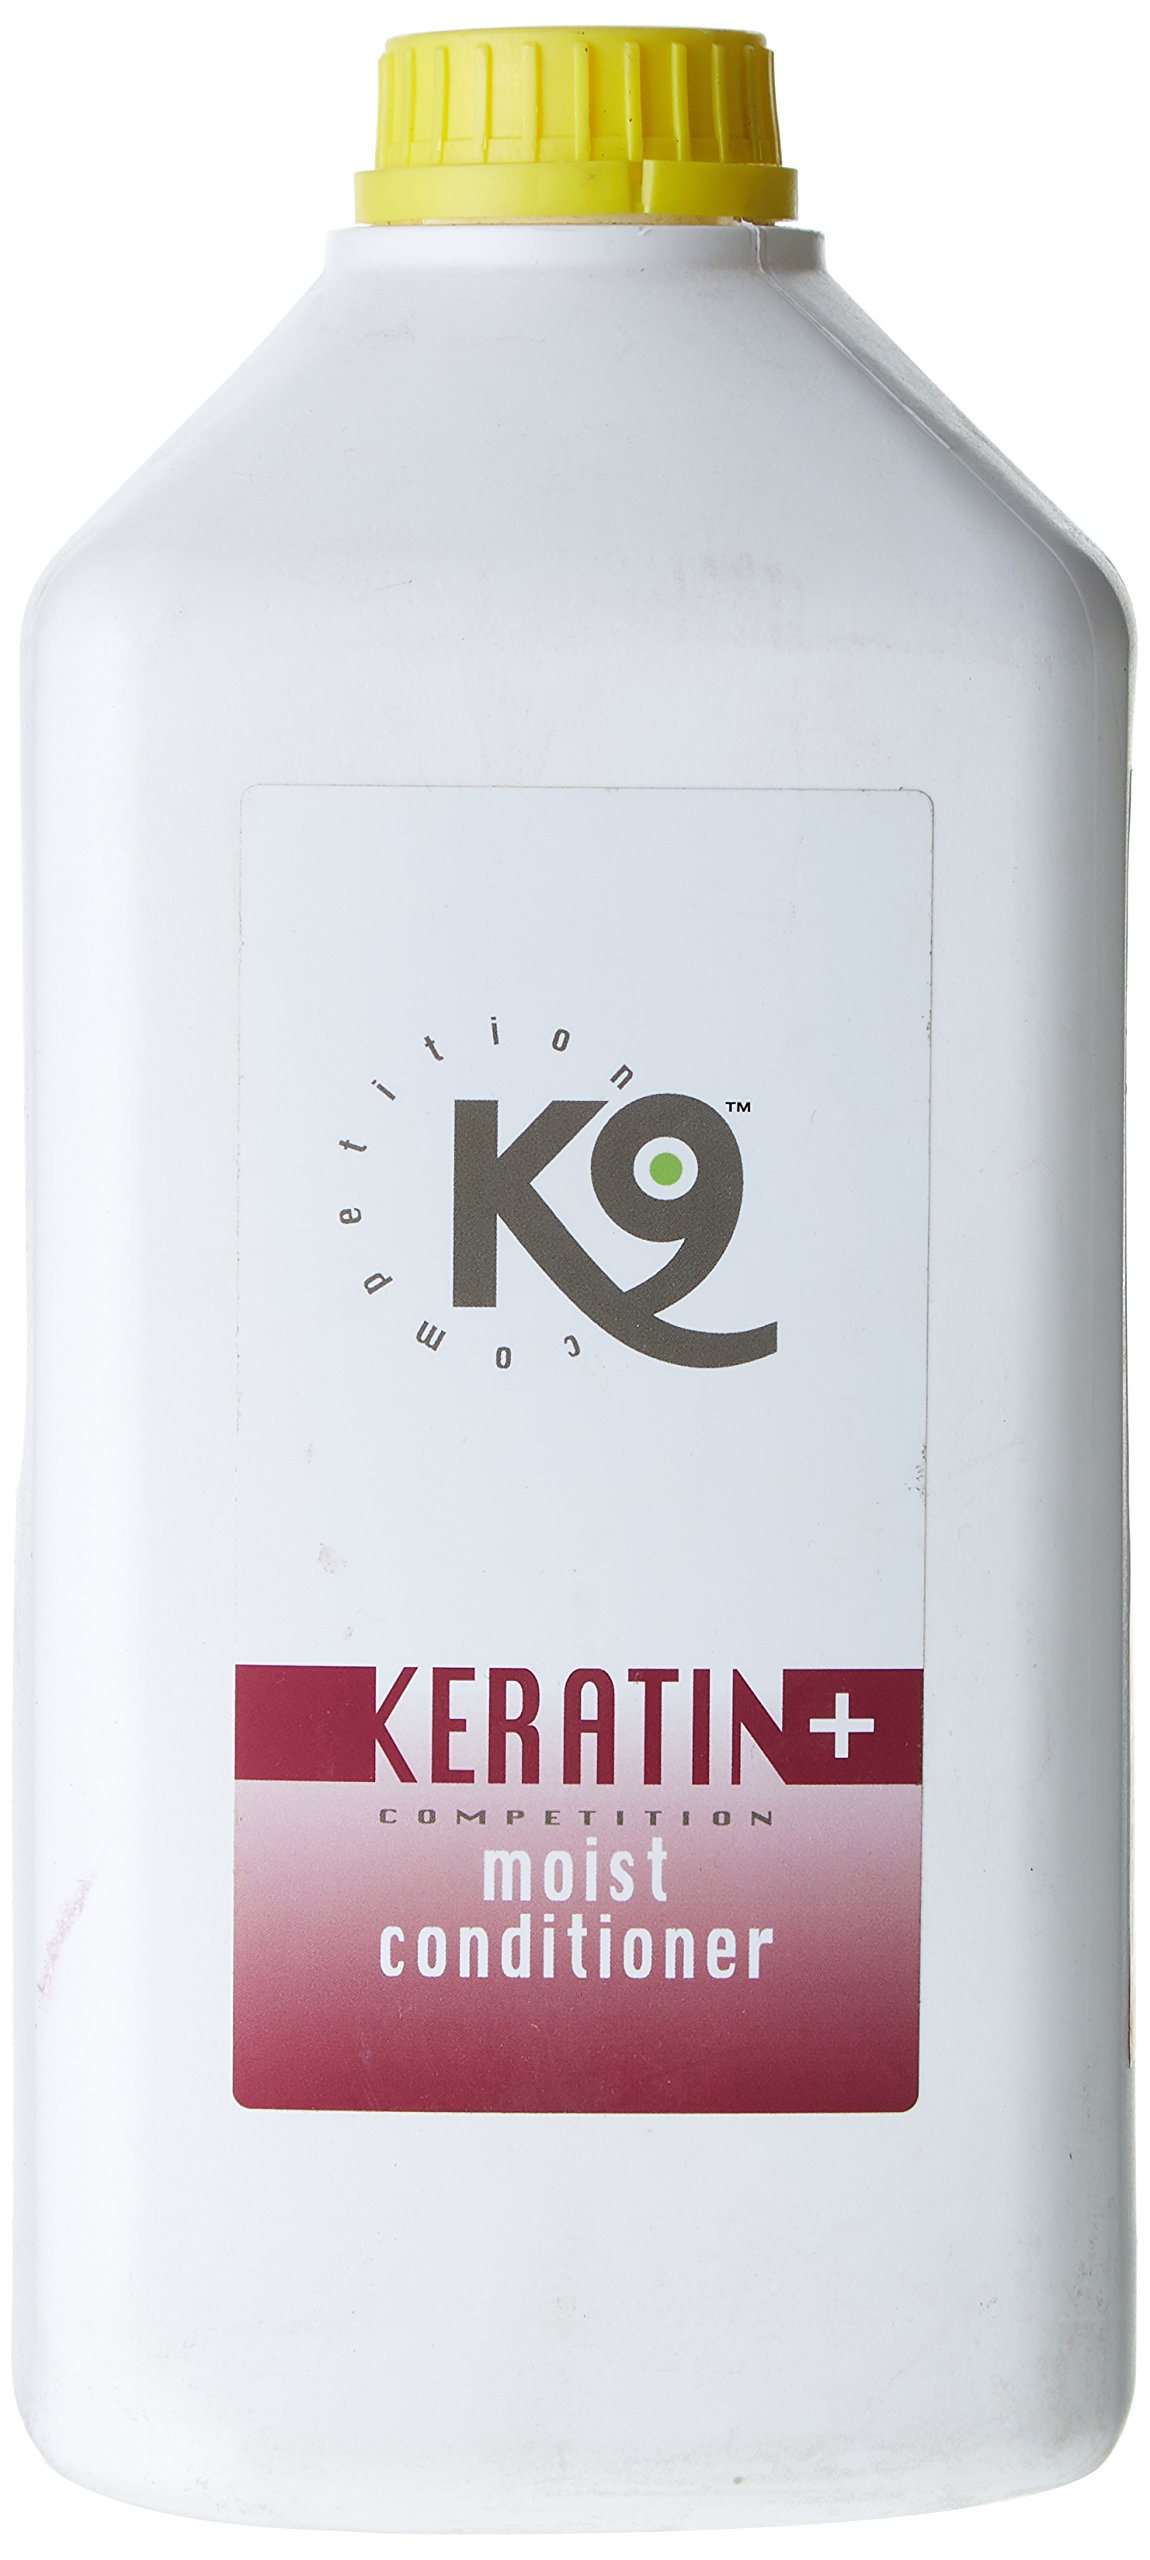 K9 - Keratin Moisture Conditioner 2.7L - (718.0652)